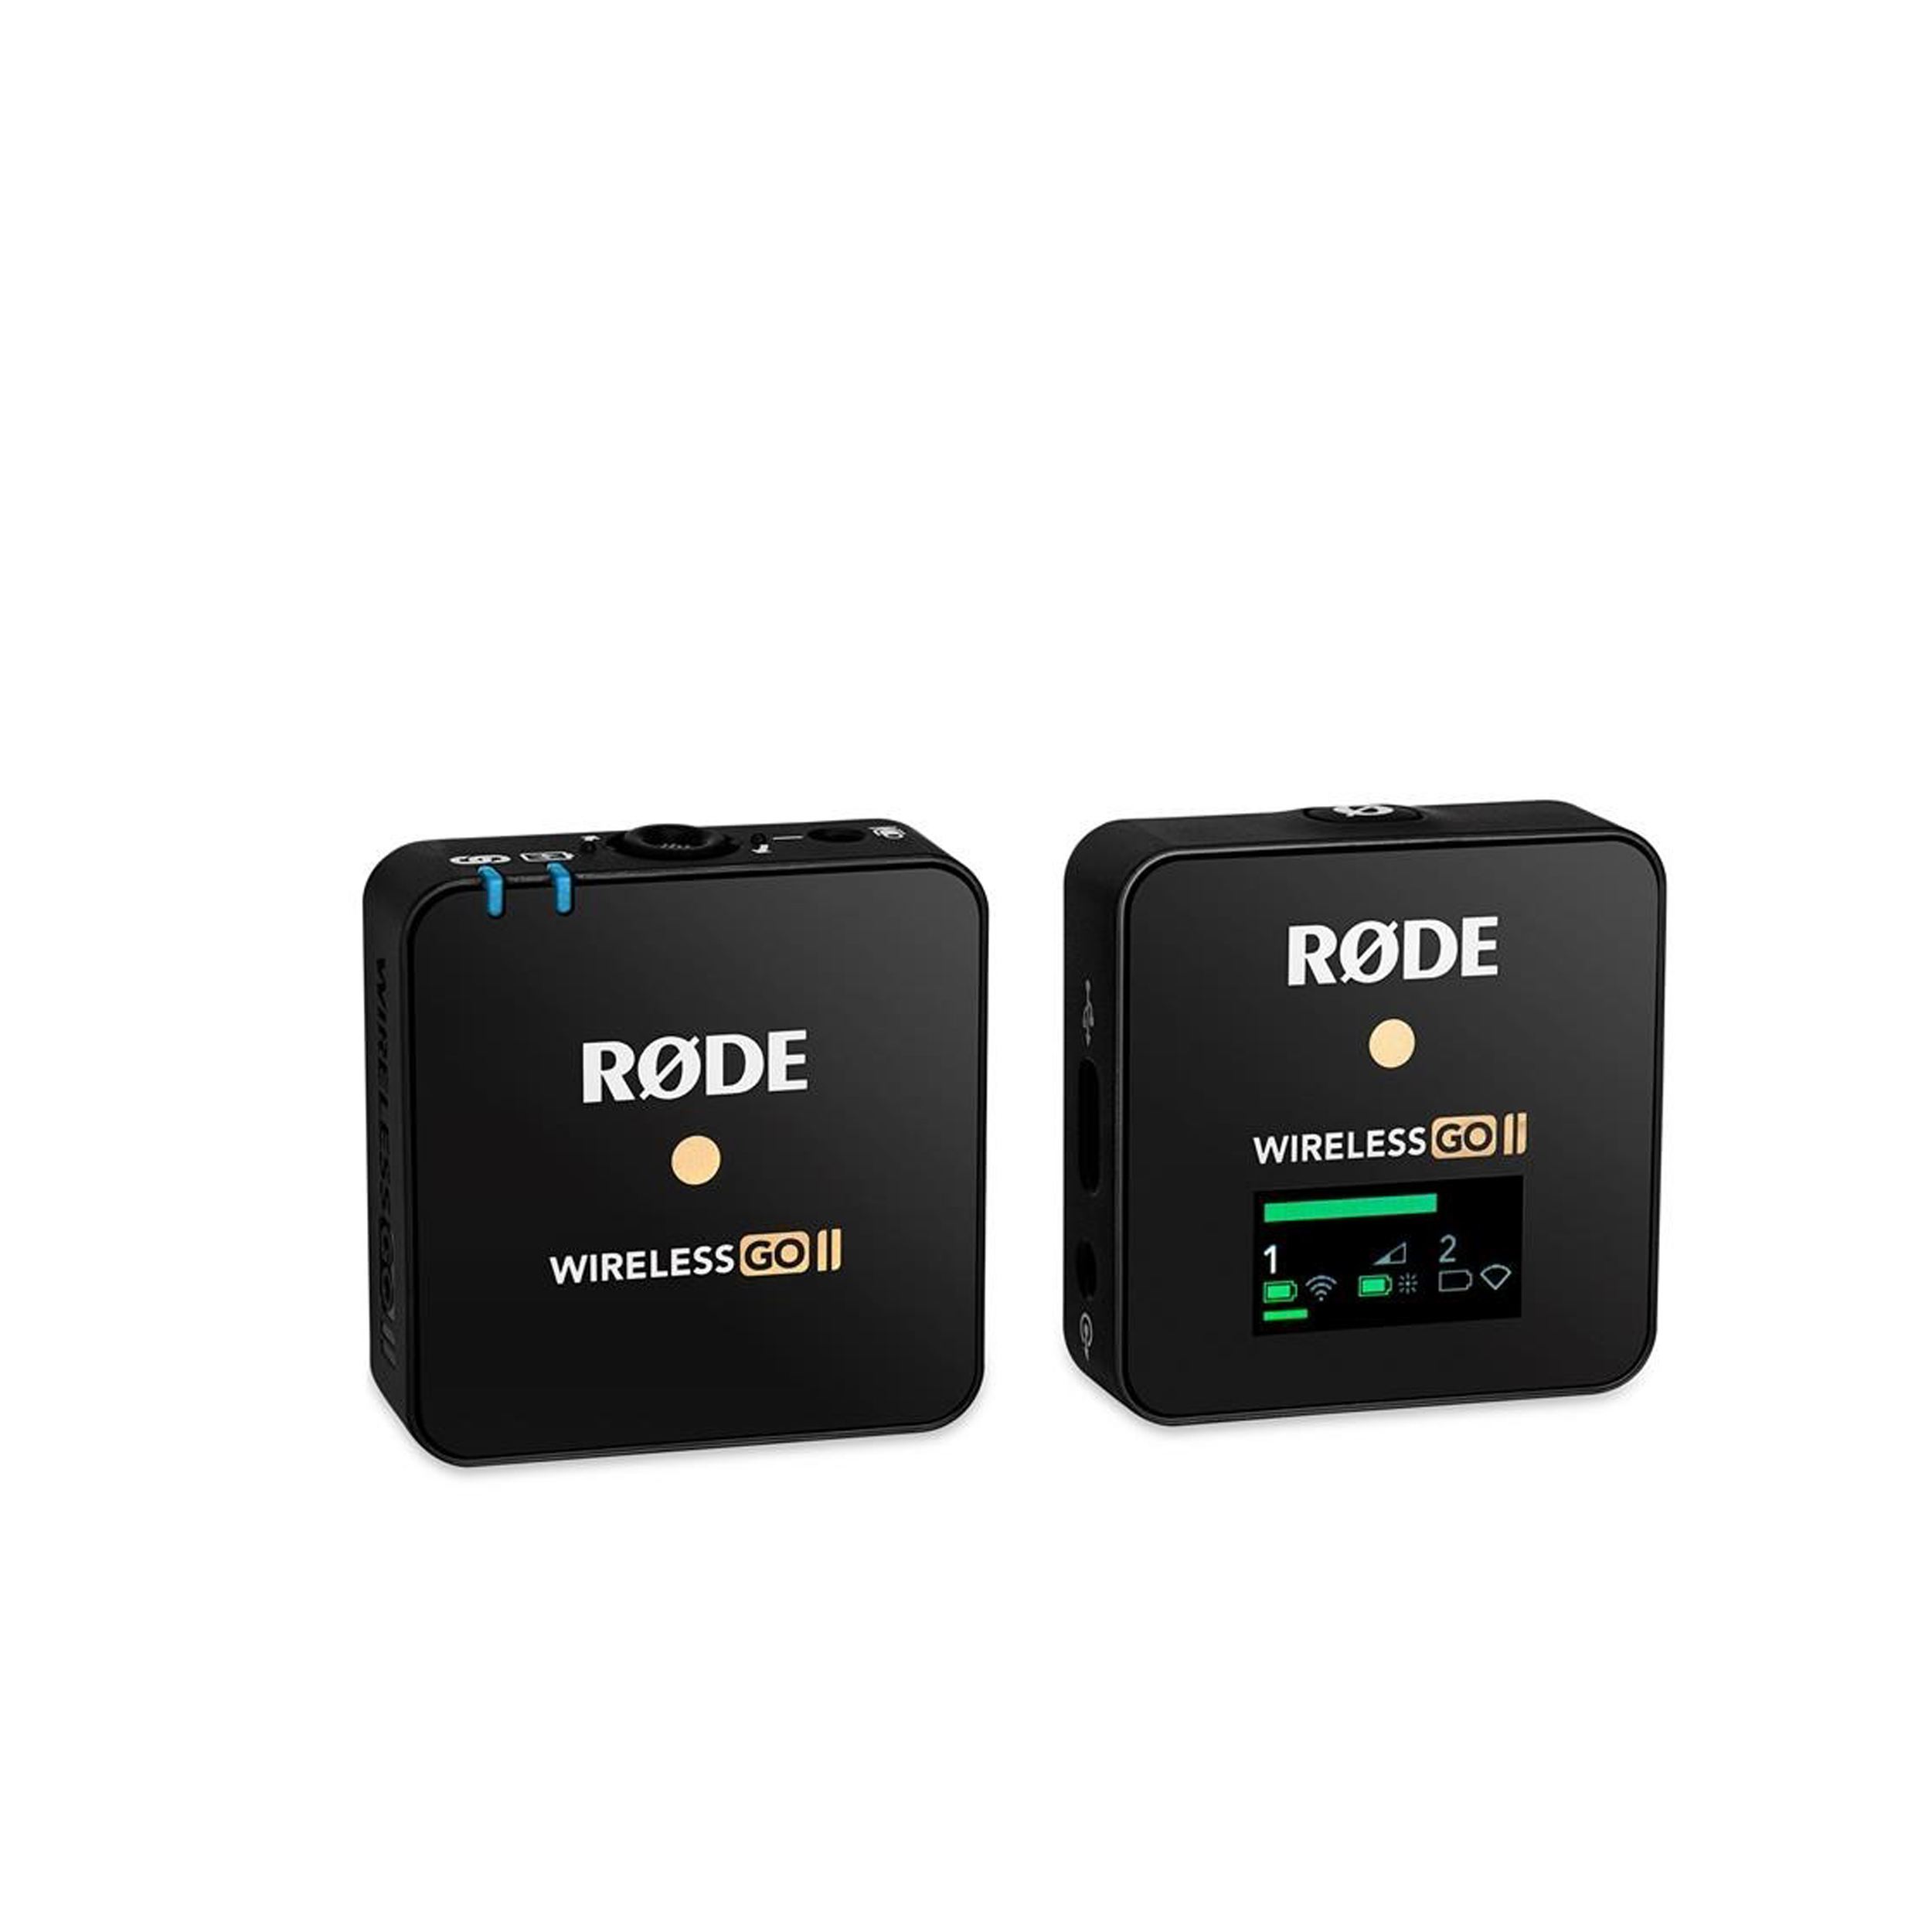 Rode Wireless GO II Single Set Compact Digital Wireless Microphone System/Recorder, 2.4 GHz - Black